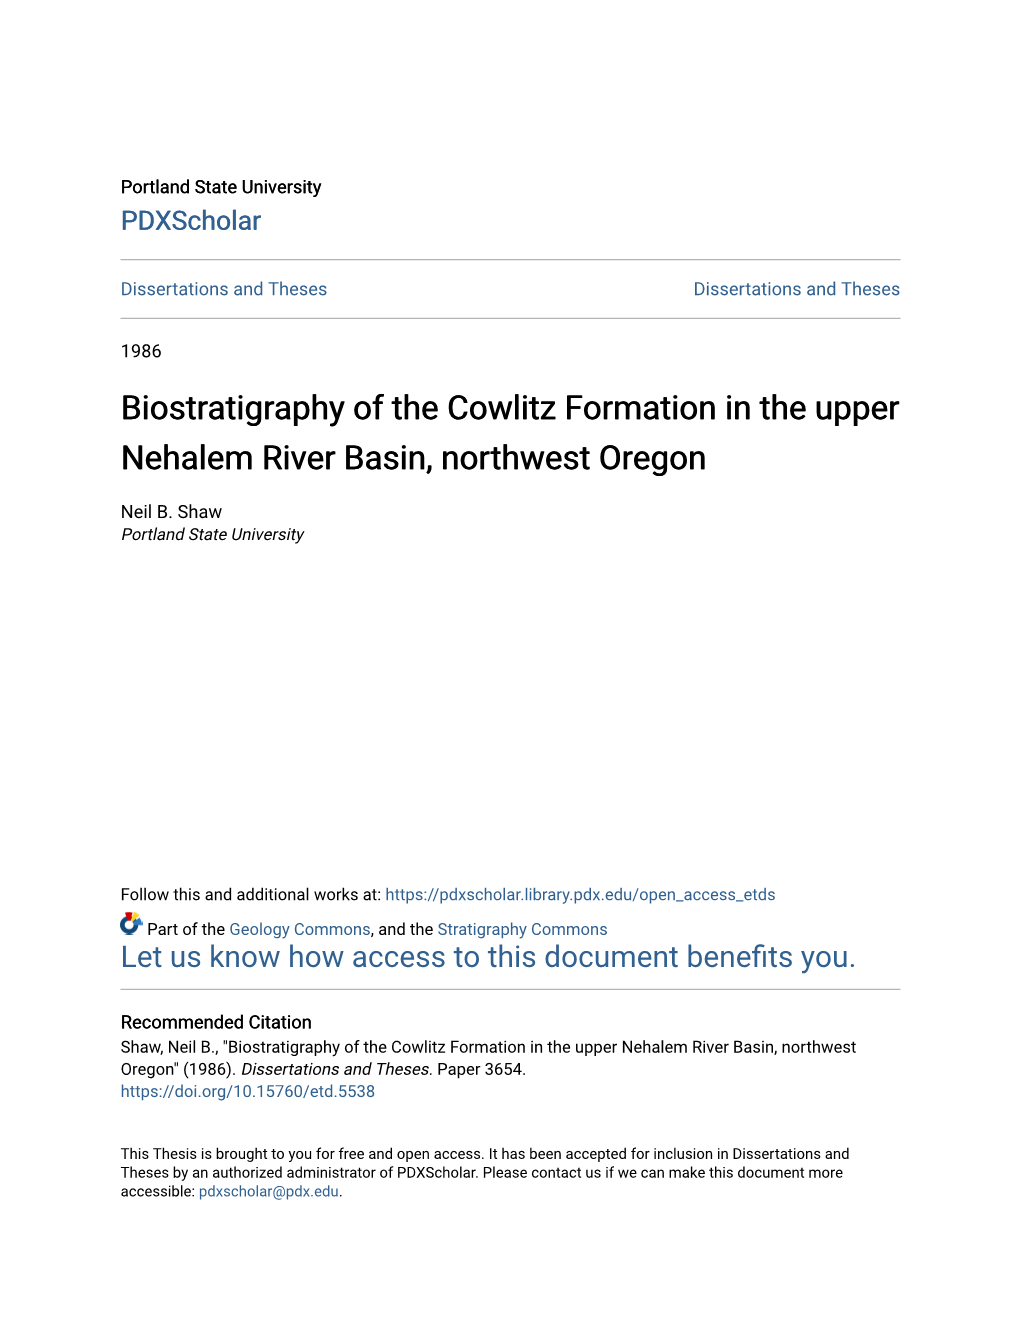 Biostratigraphy of the Cowlitz Formation in the Upper Nehalem River Basin, Northwest Oregon